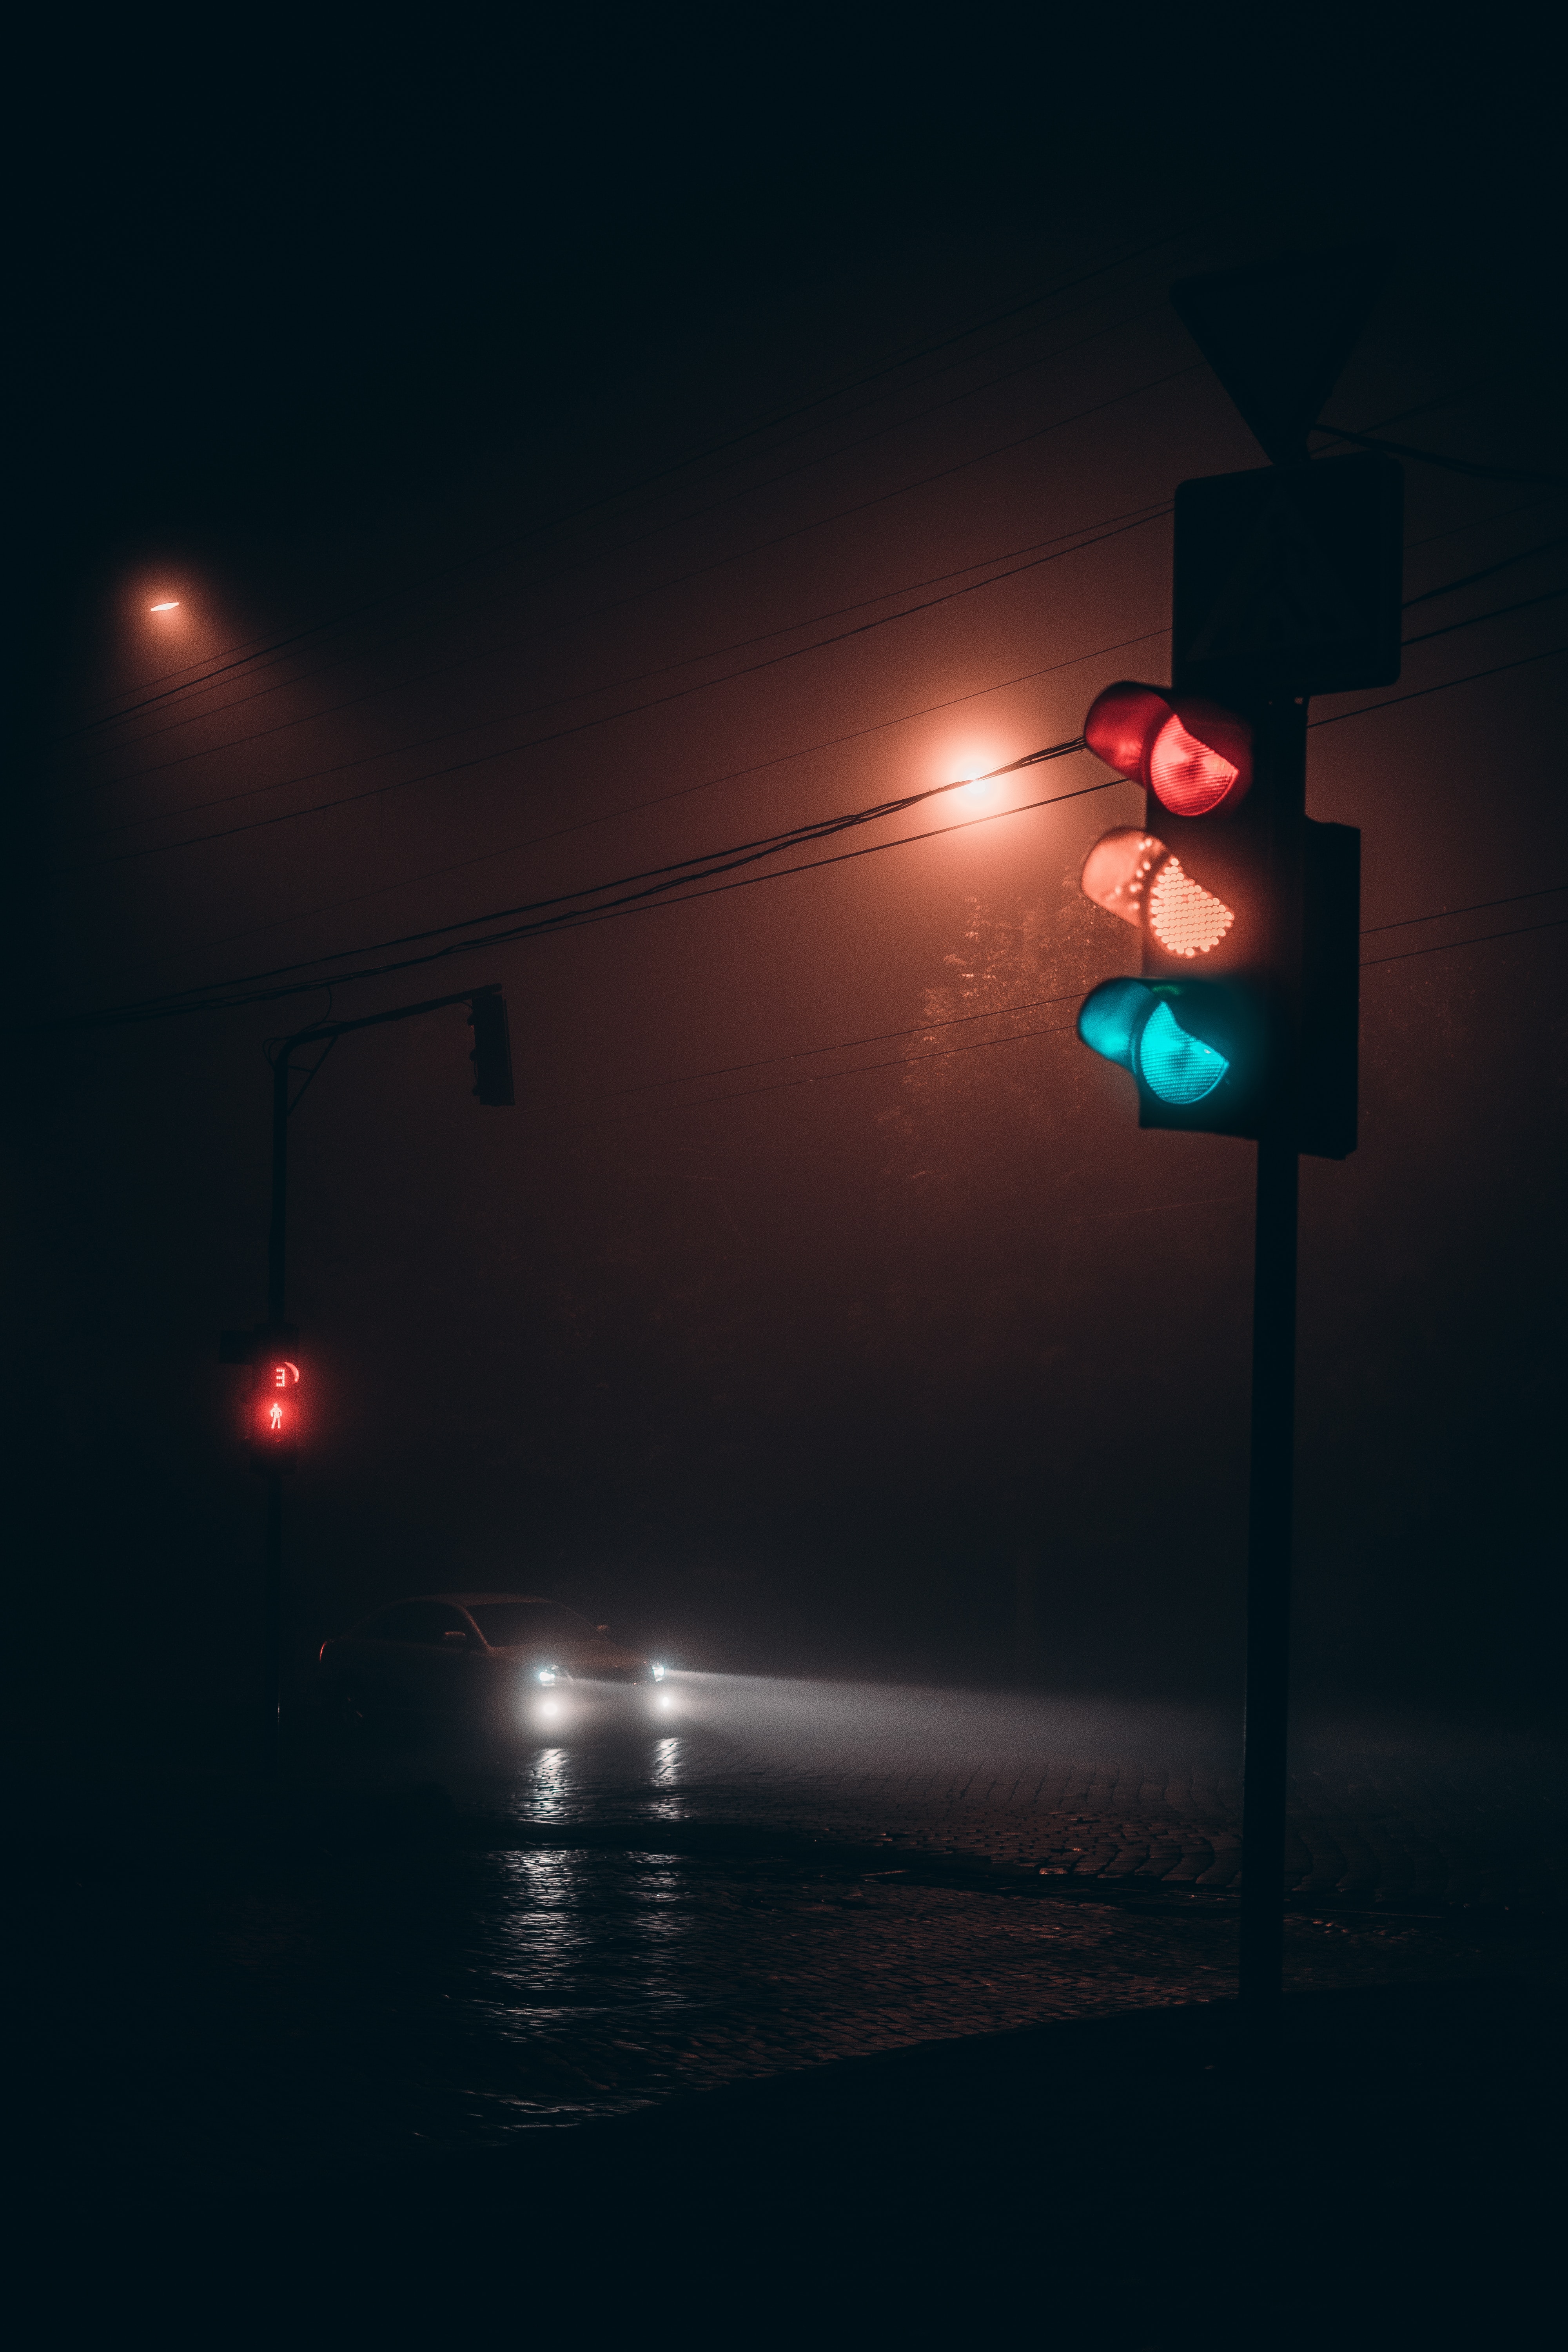 desktop Images dark, machine, cities, night, road, fog, car, traffic light